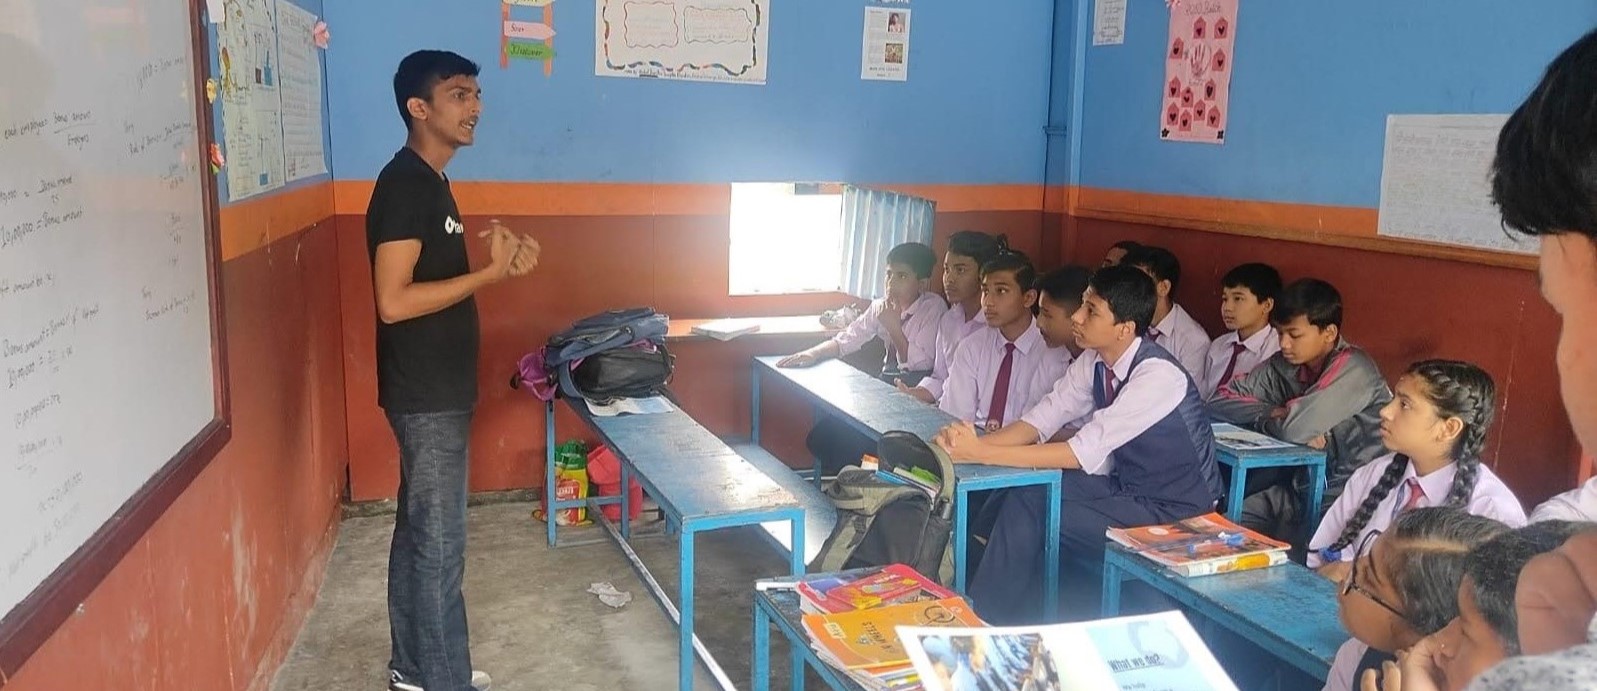 CoSoG Nepal presentation at Everest school